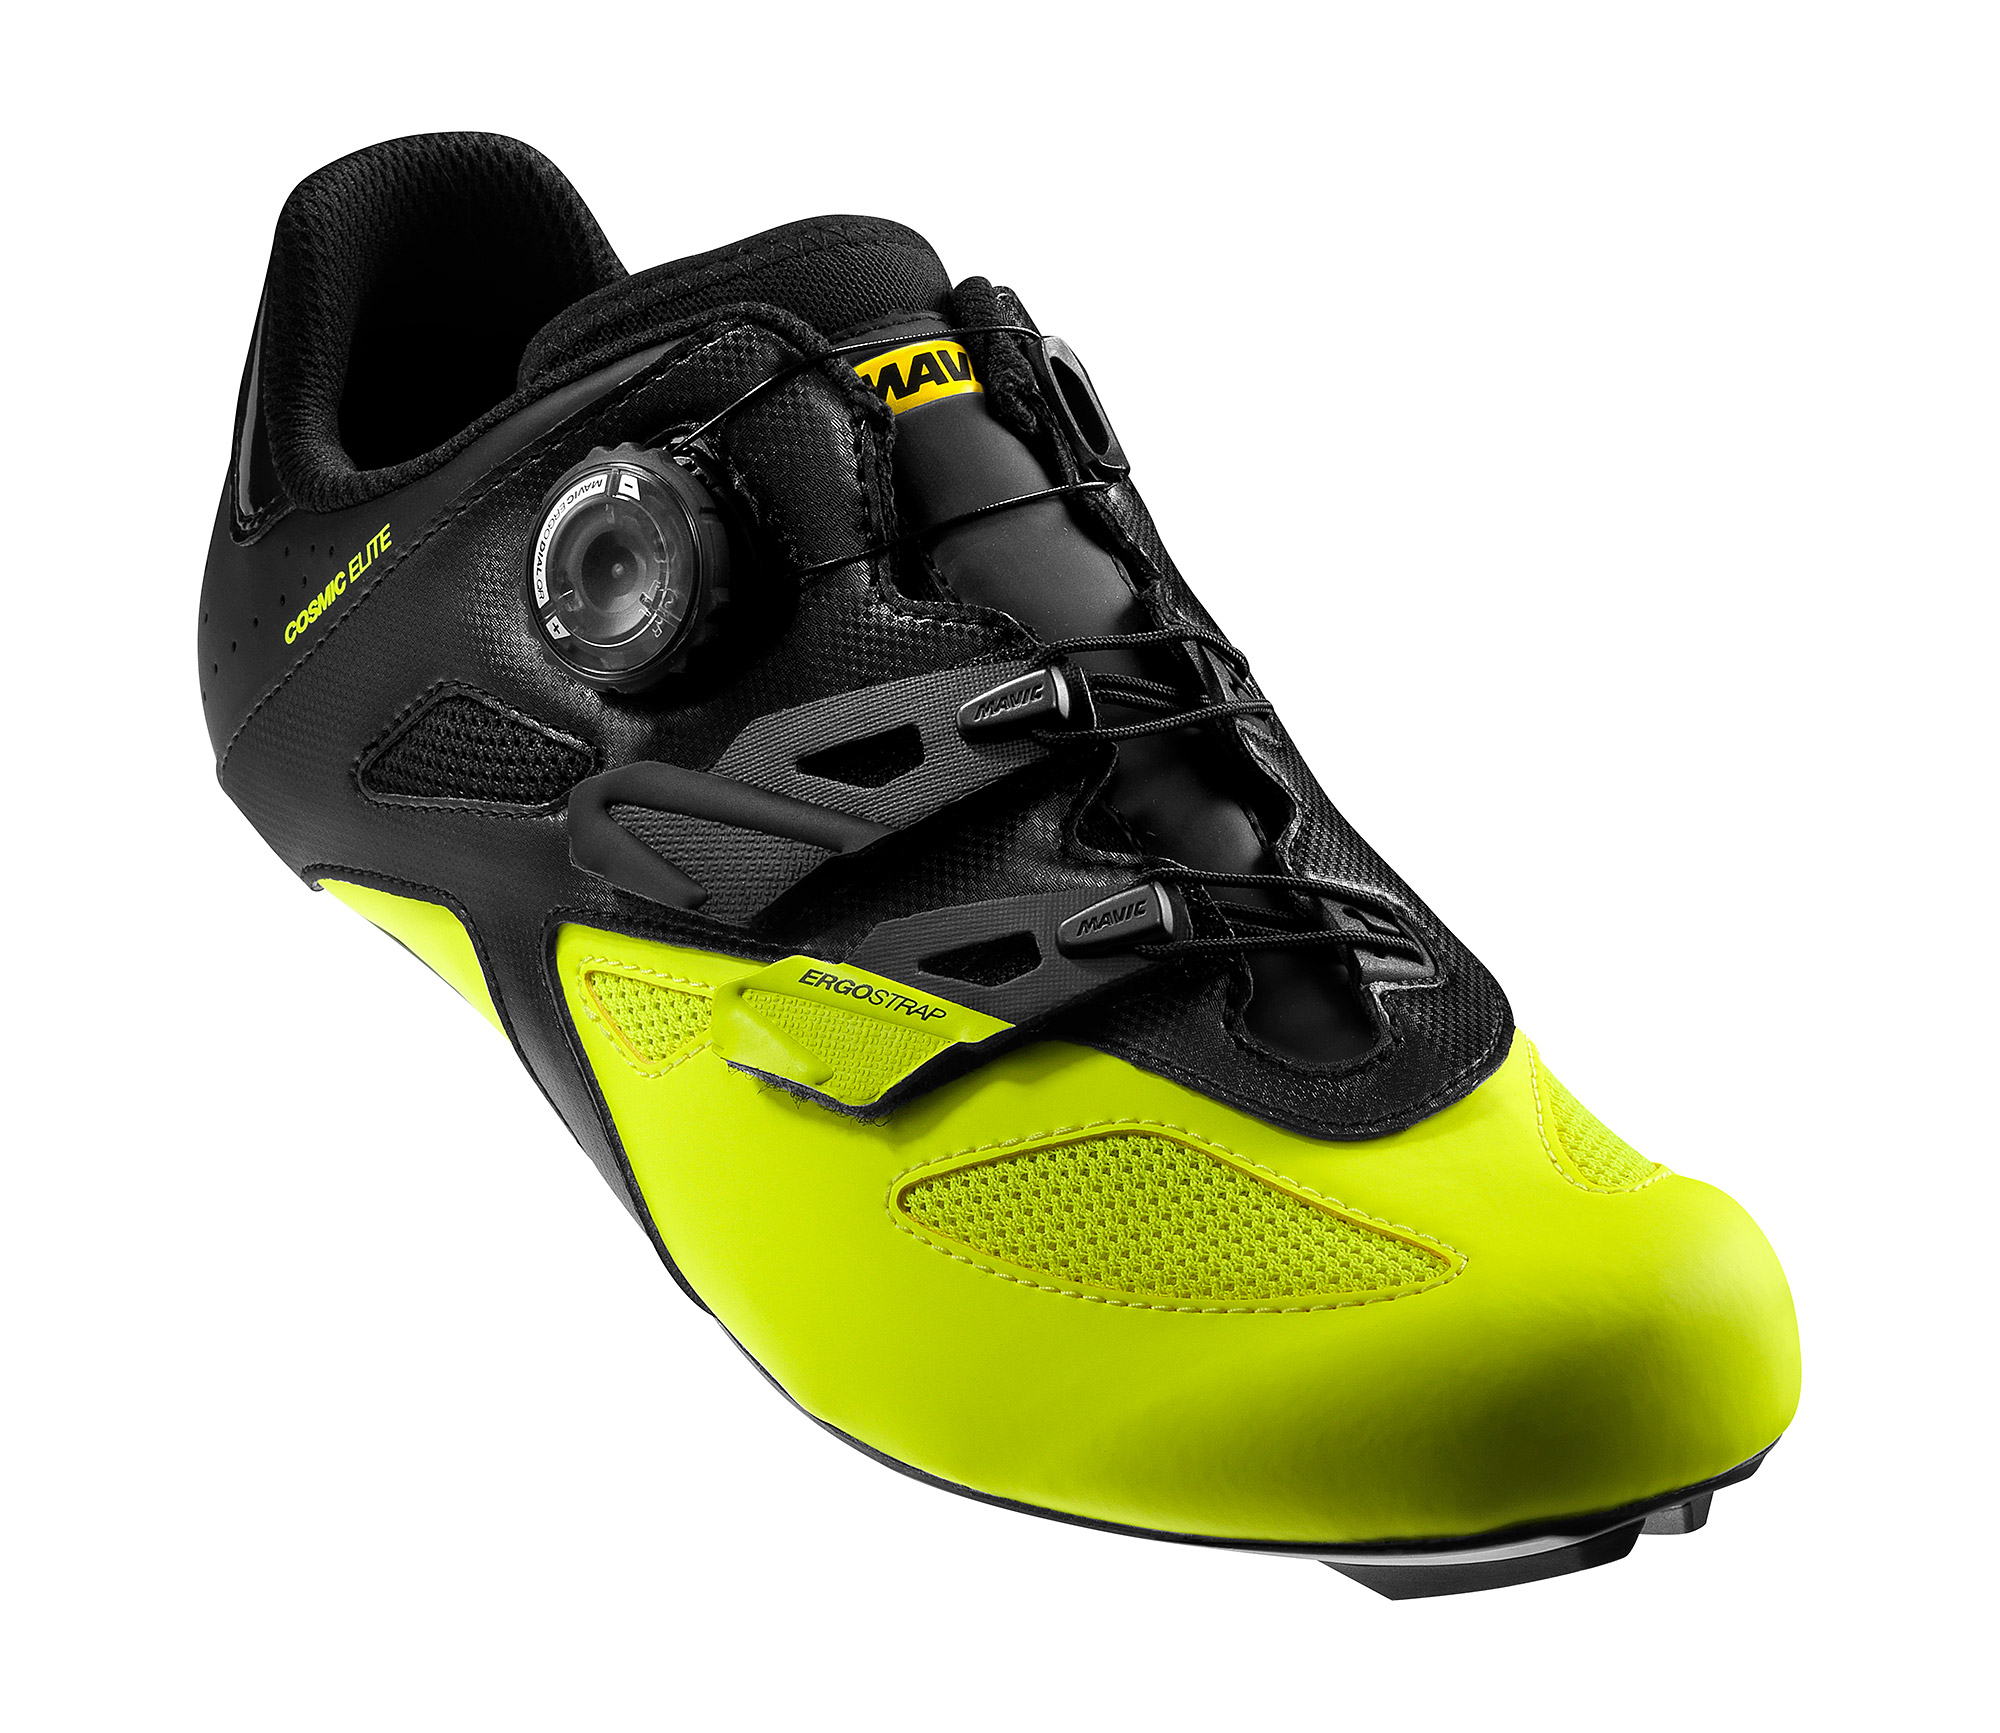 Обувь Mavic COSMIC ELITE, размер UK 9 (43 1/3, 274мм) Black/Black/Safety черно-желтая фото 